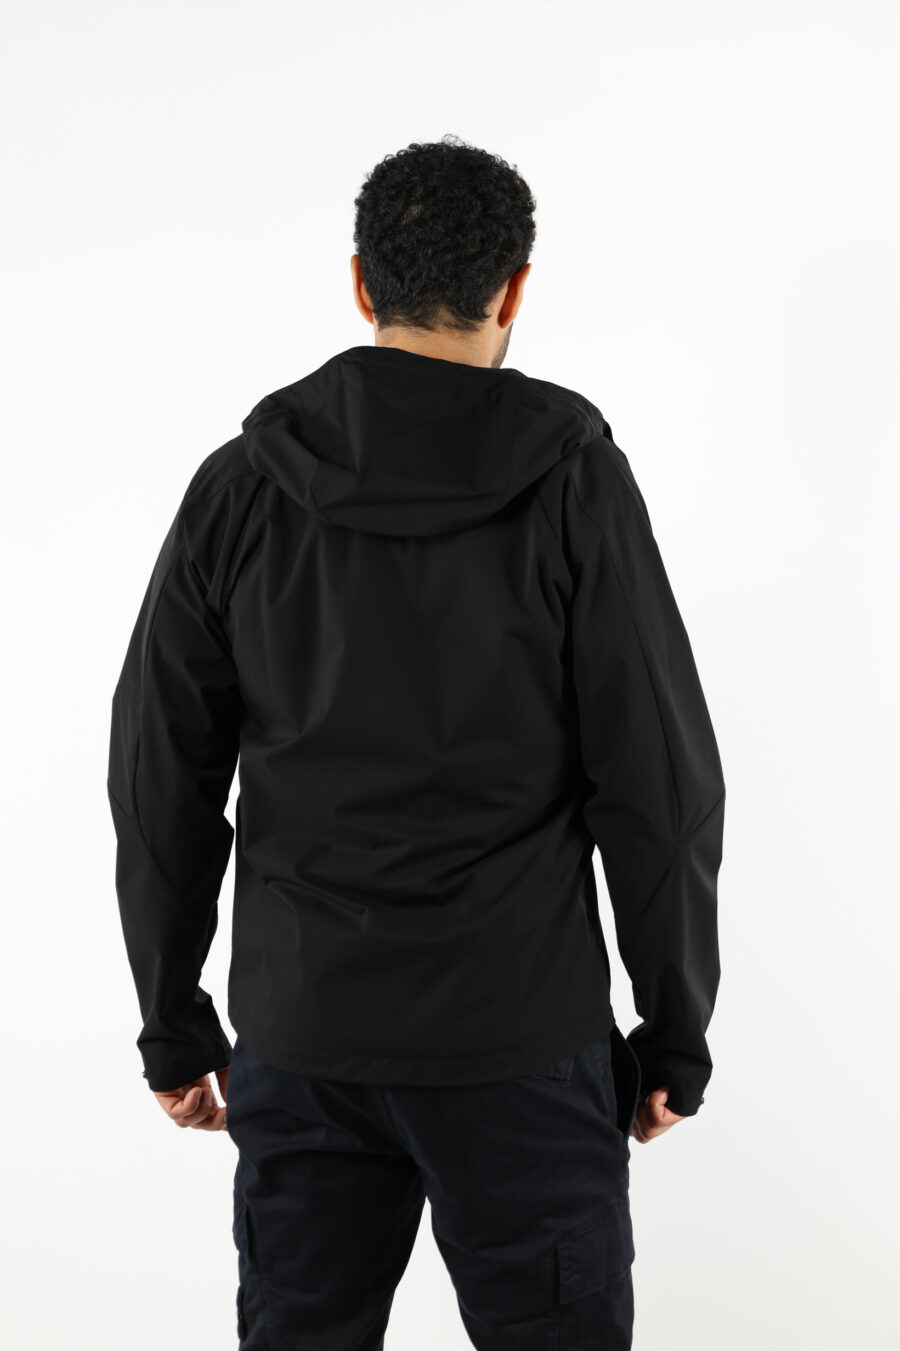 Schwarze Jacke mit Kapuze und Minilogue-Objektiv - 111418